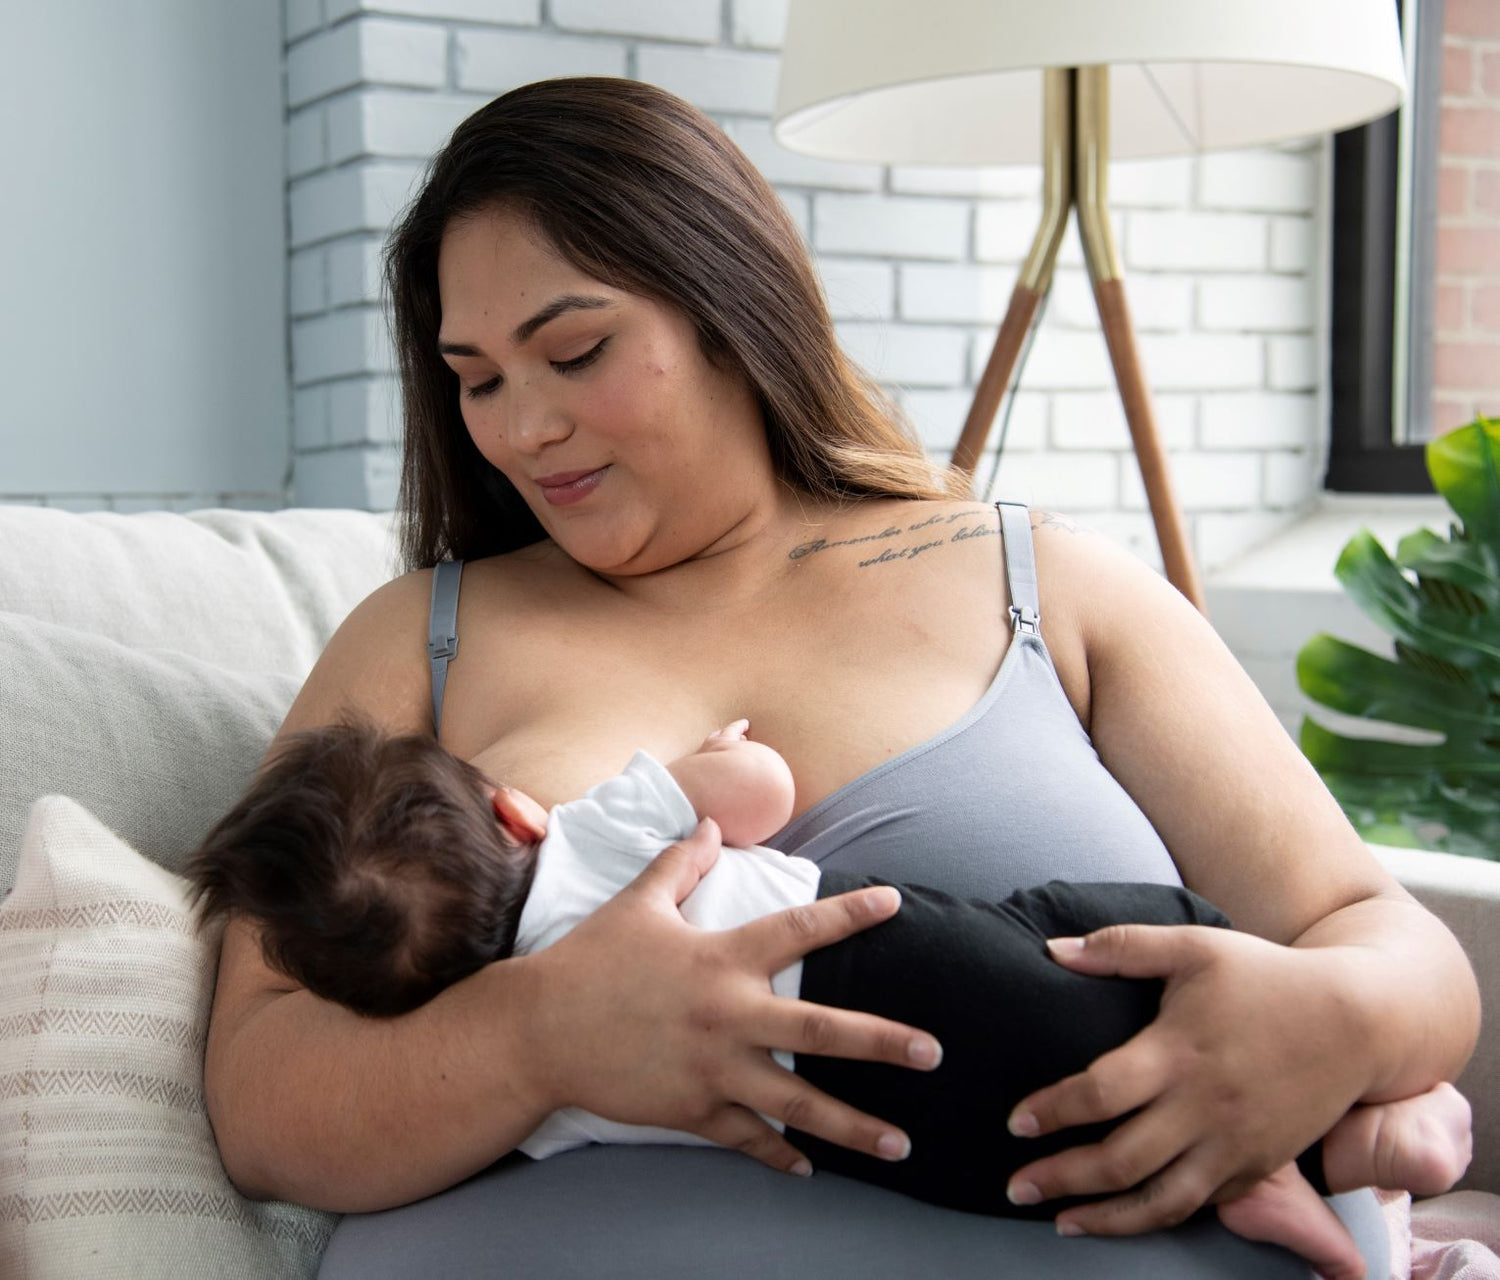 Bamboobies Nursing Tank Top, Maternity Clothes For Breastfeeding